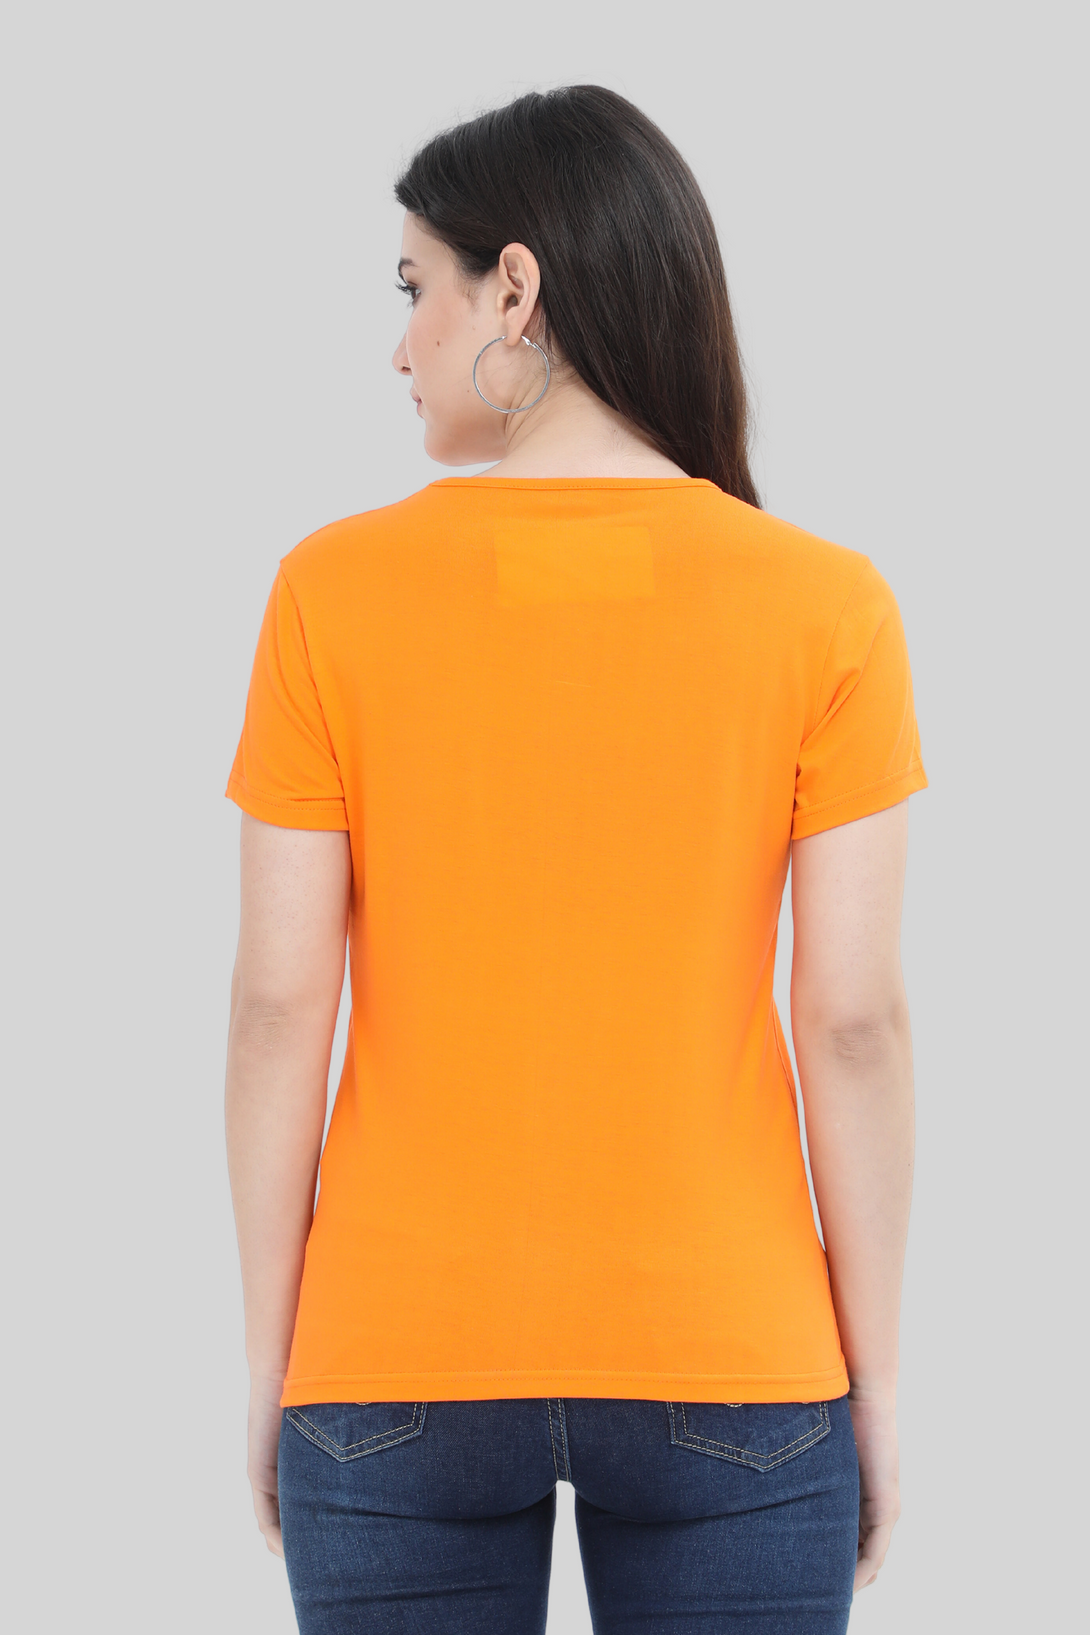 Orange Scoop Neck T-Shirt For Women - WowWaves - 3